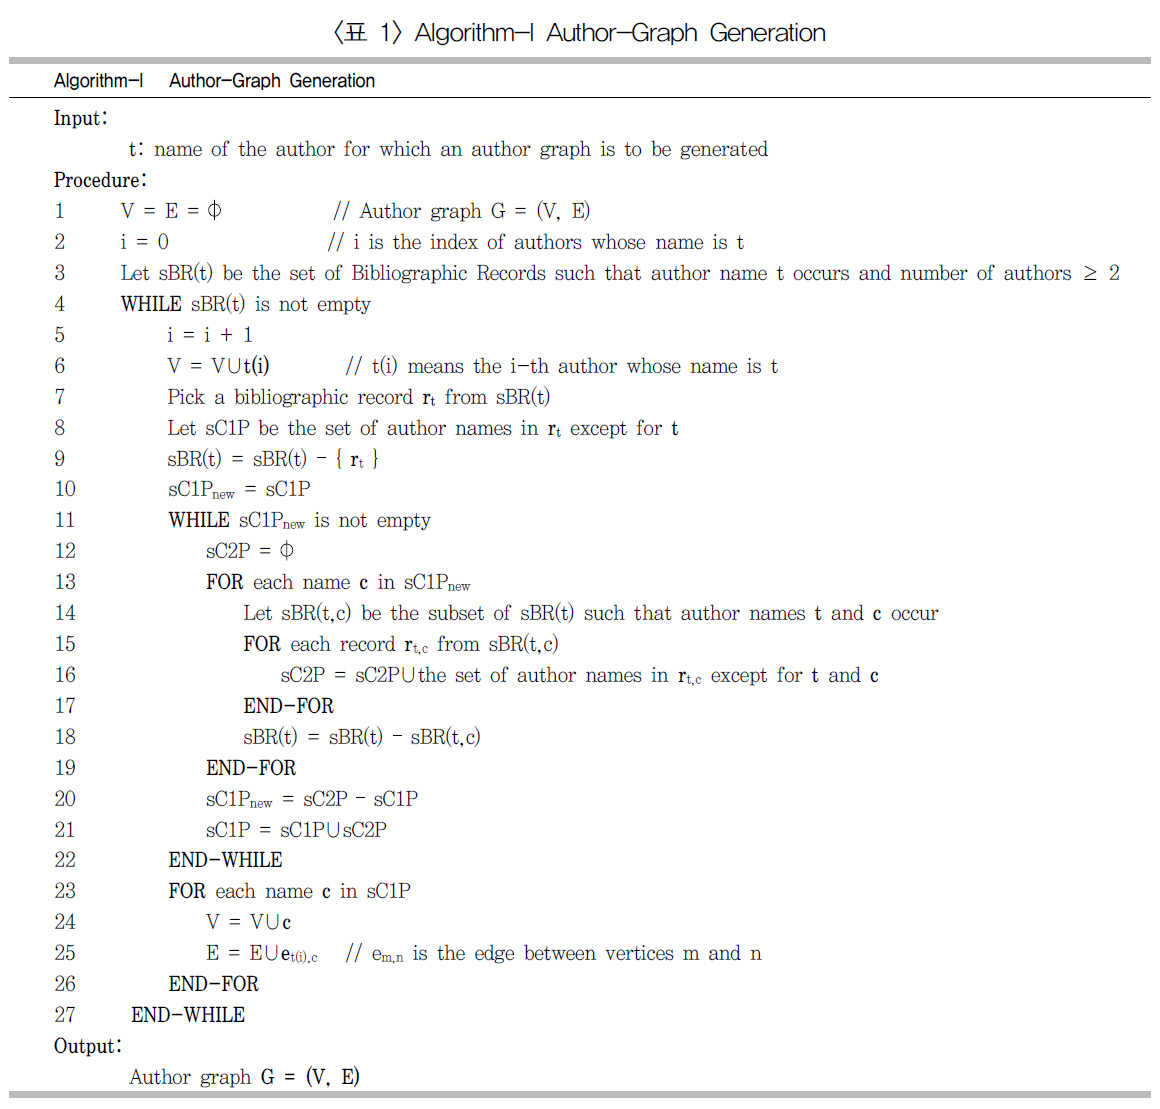 Algorithm-I Author-Graph Generation